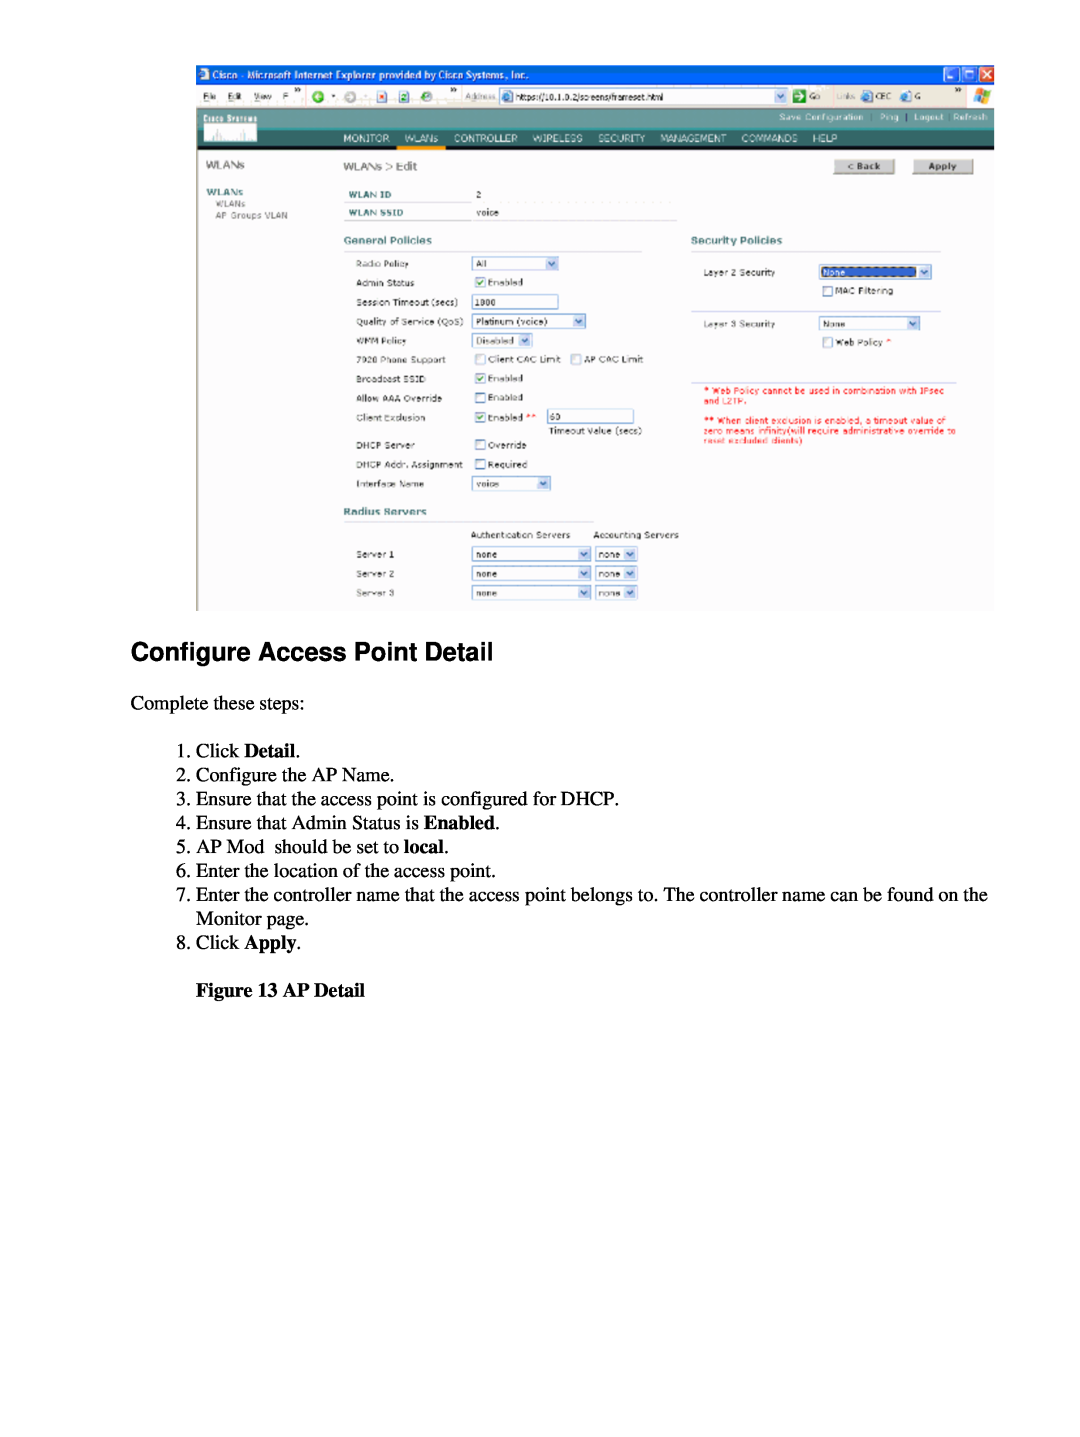 Cisco Systems 71642 manual Configure Access Point Detail, AP Detail 